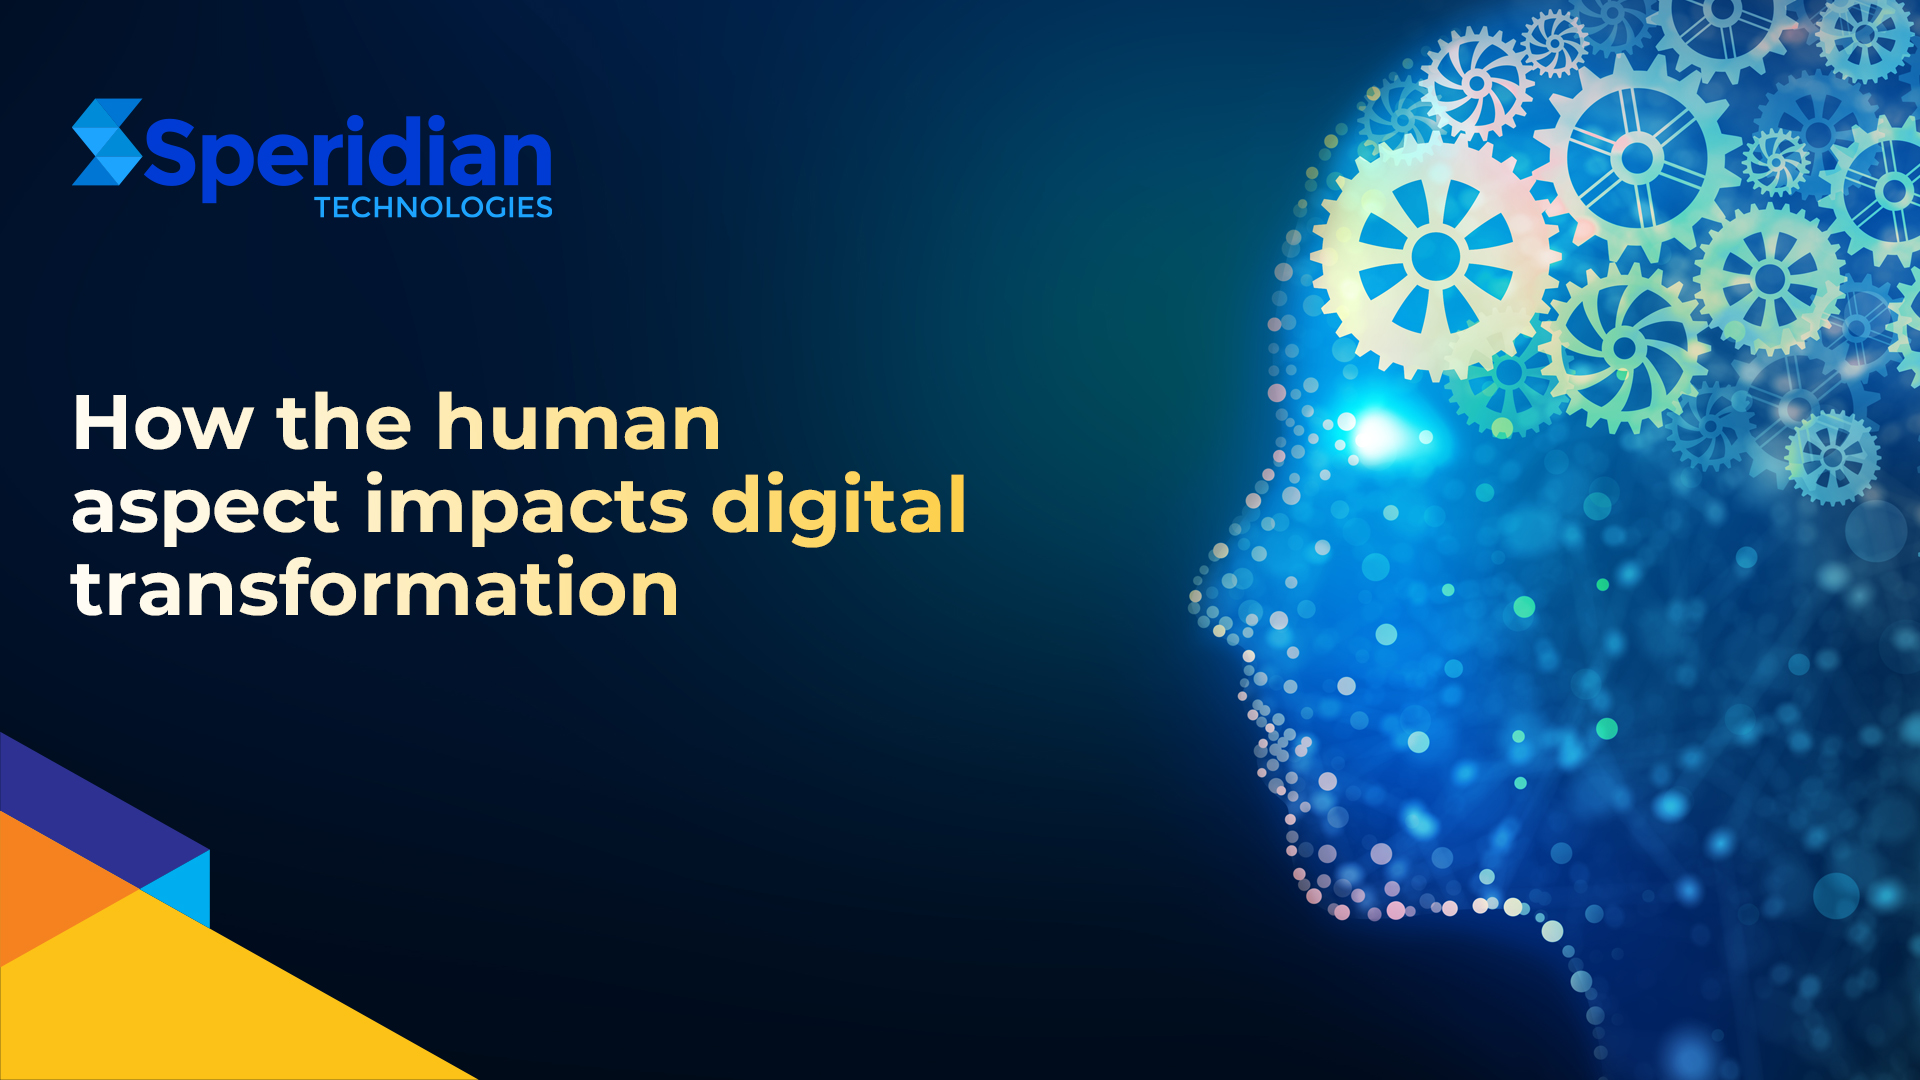 human aspects and digital transformation